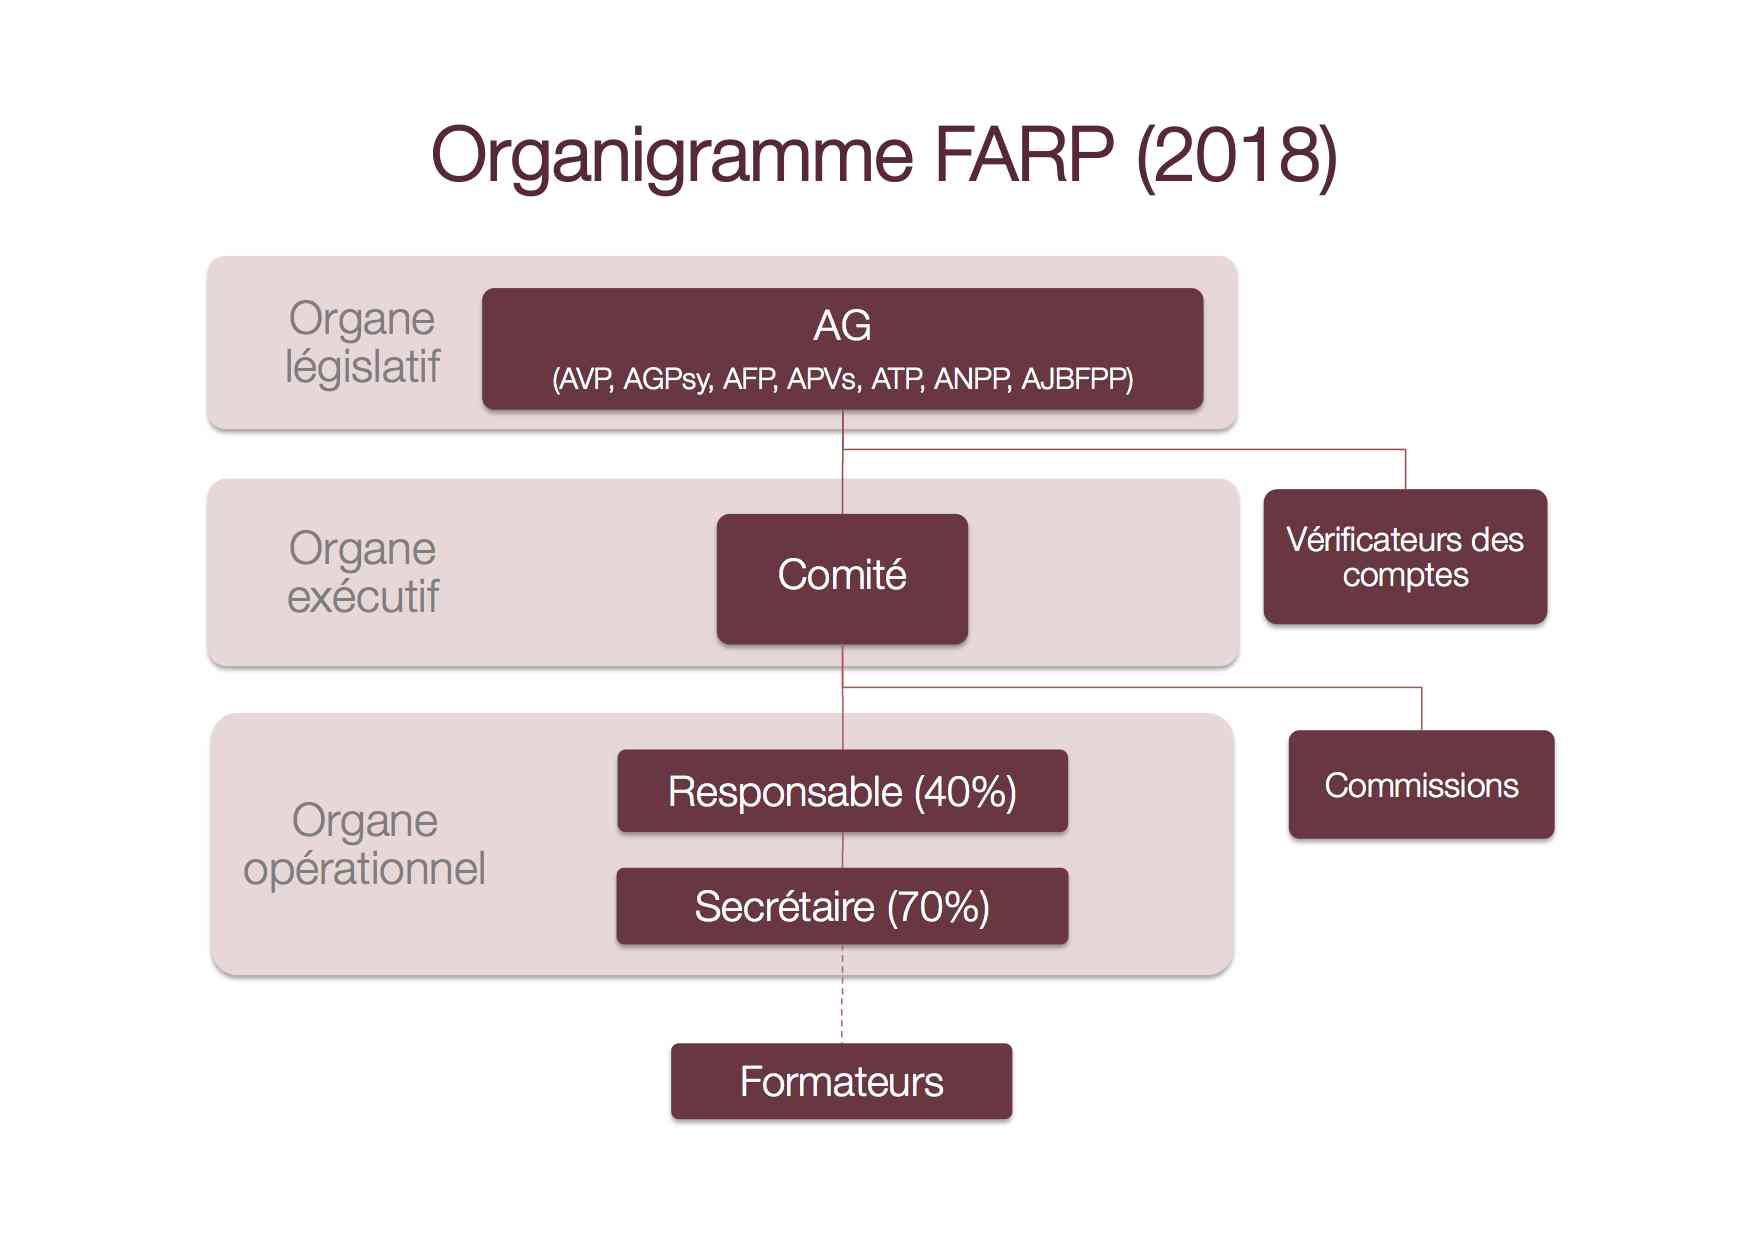 Organigramme FARP 2018.jpg